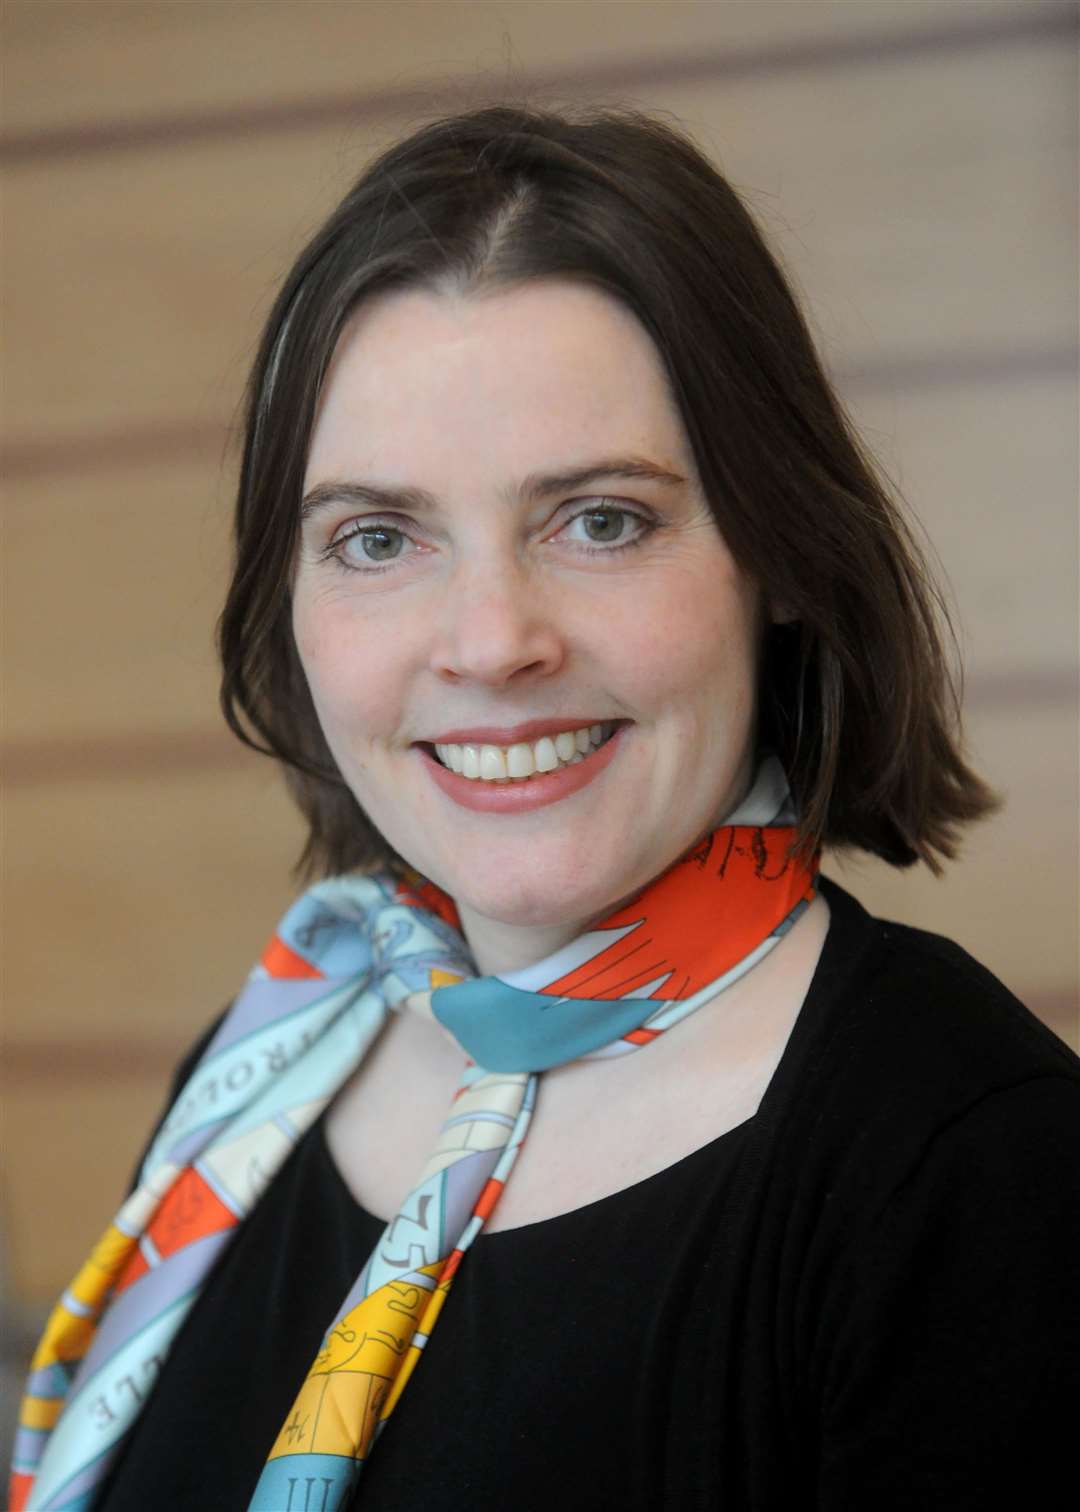 Amanda McLeod, chair of the National Handwriting Association, thinks handwriting is vital